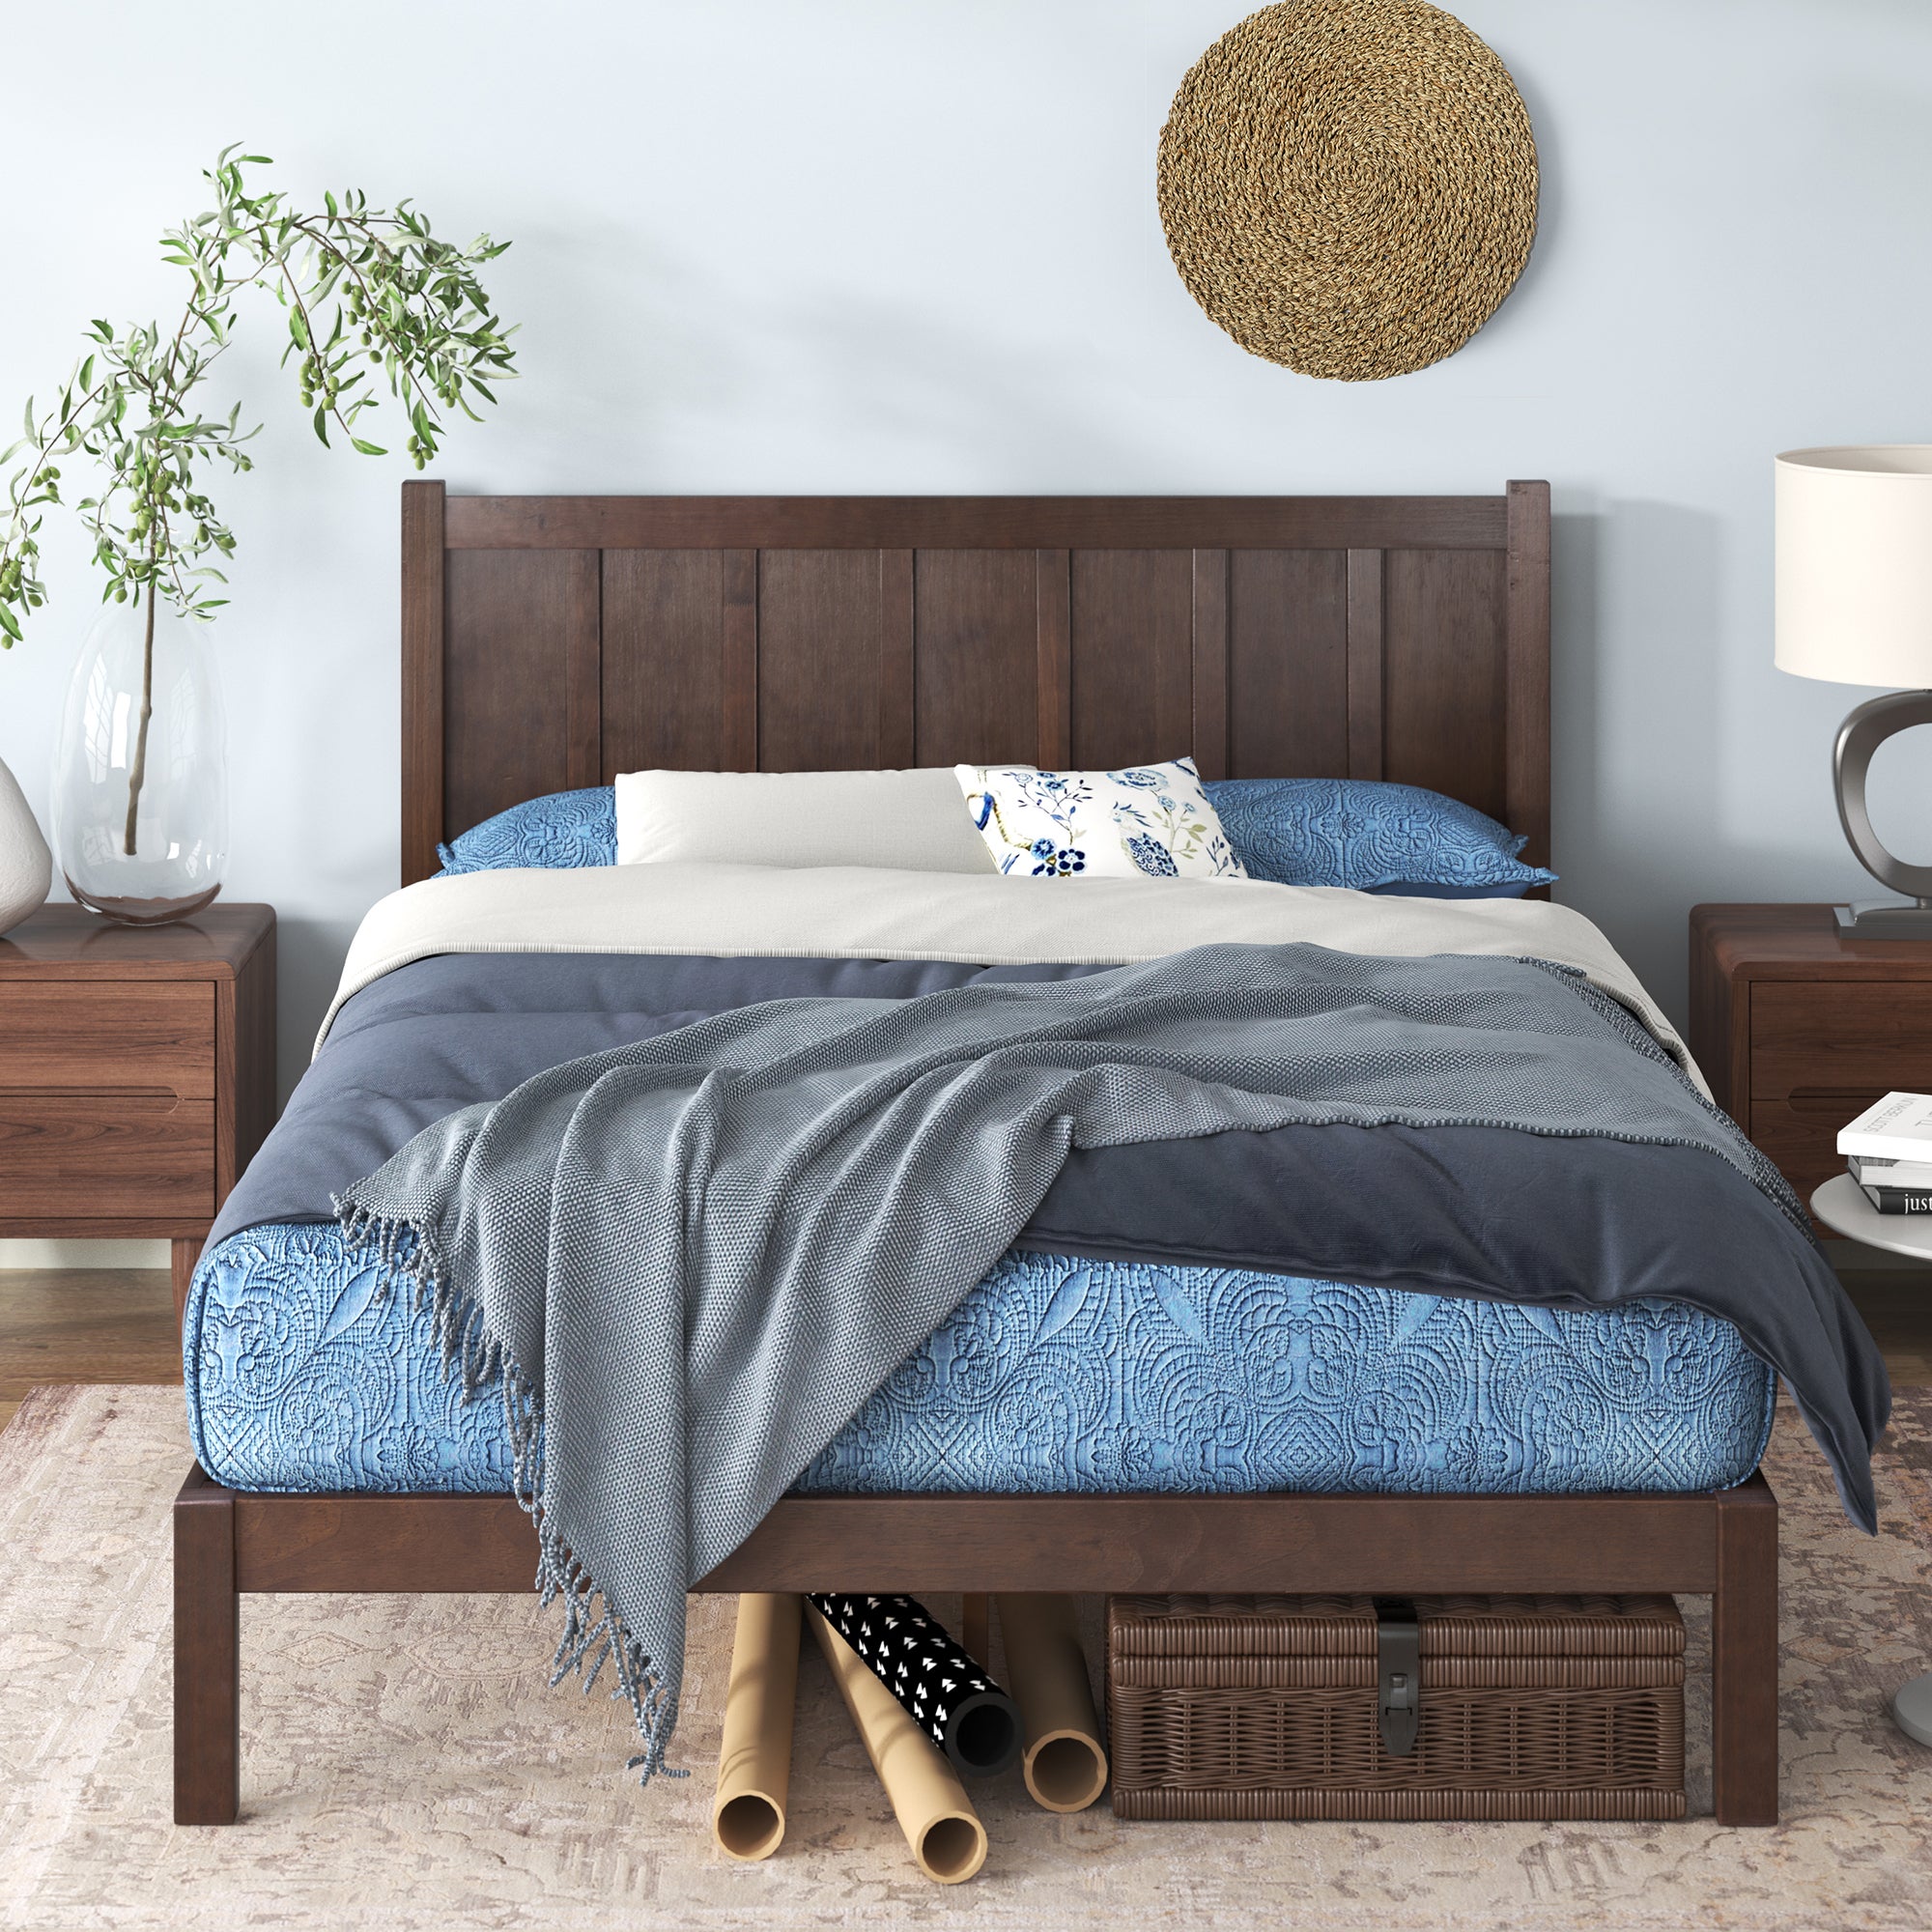 Zinus Adrian Solid Wood Bed Frame - Queen Size